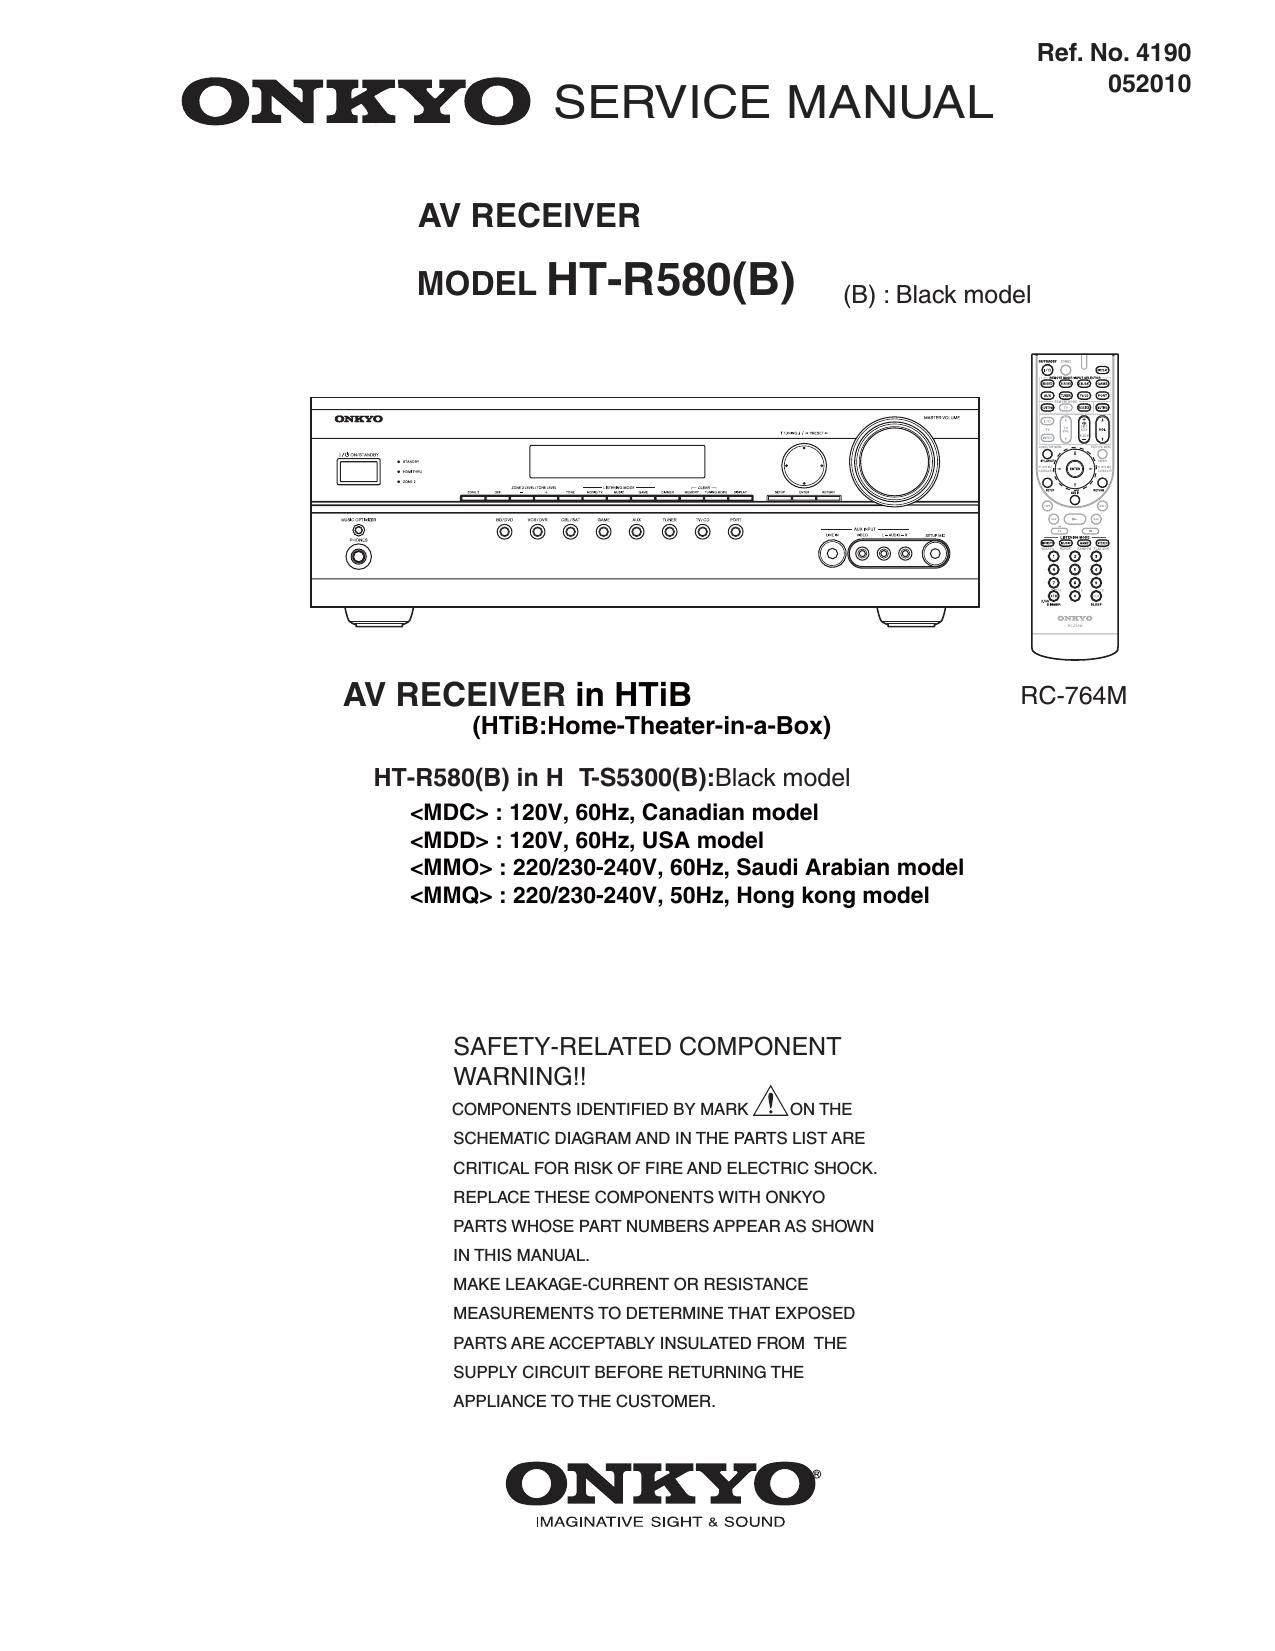 Onkyo HTR 580 Service Manual